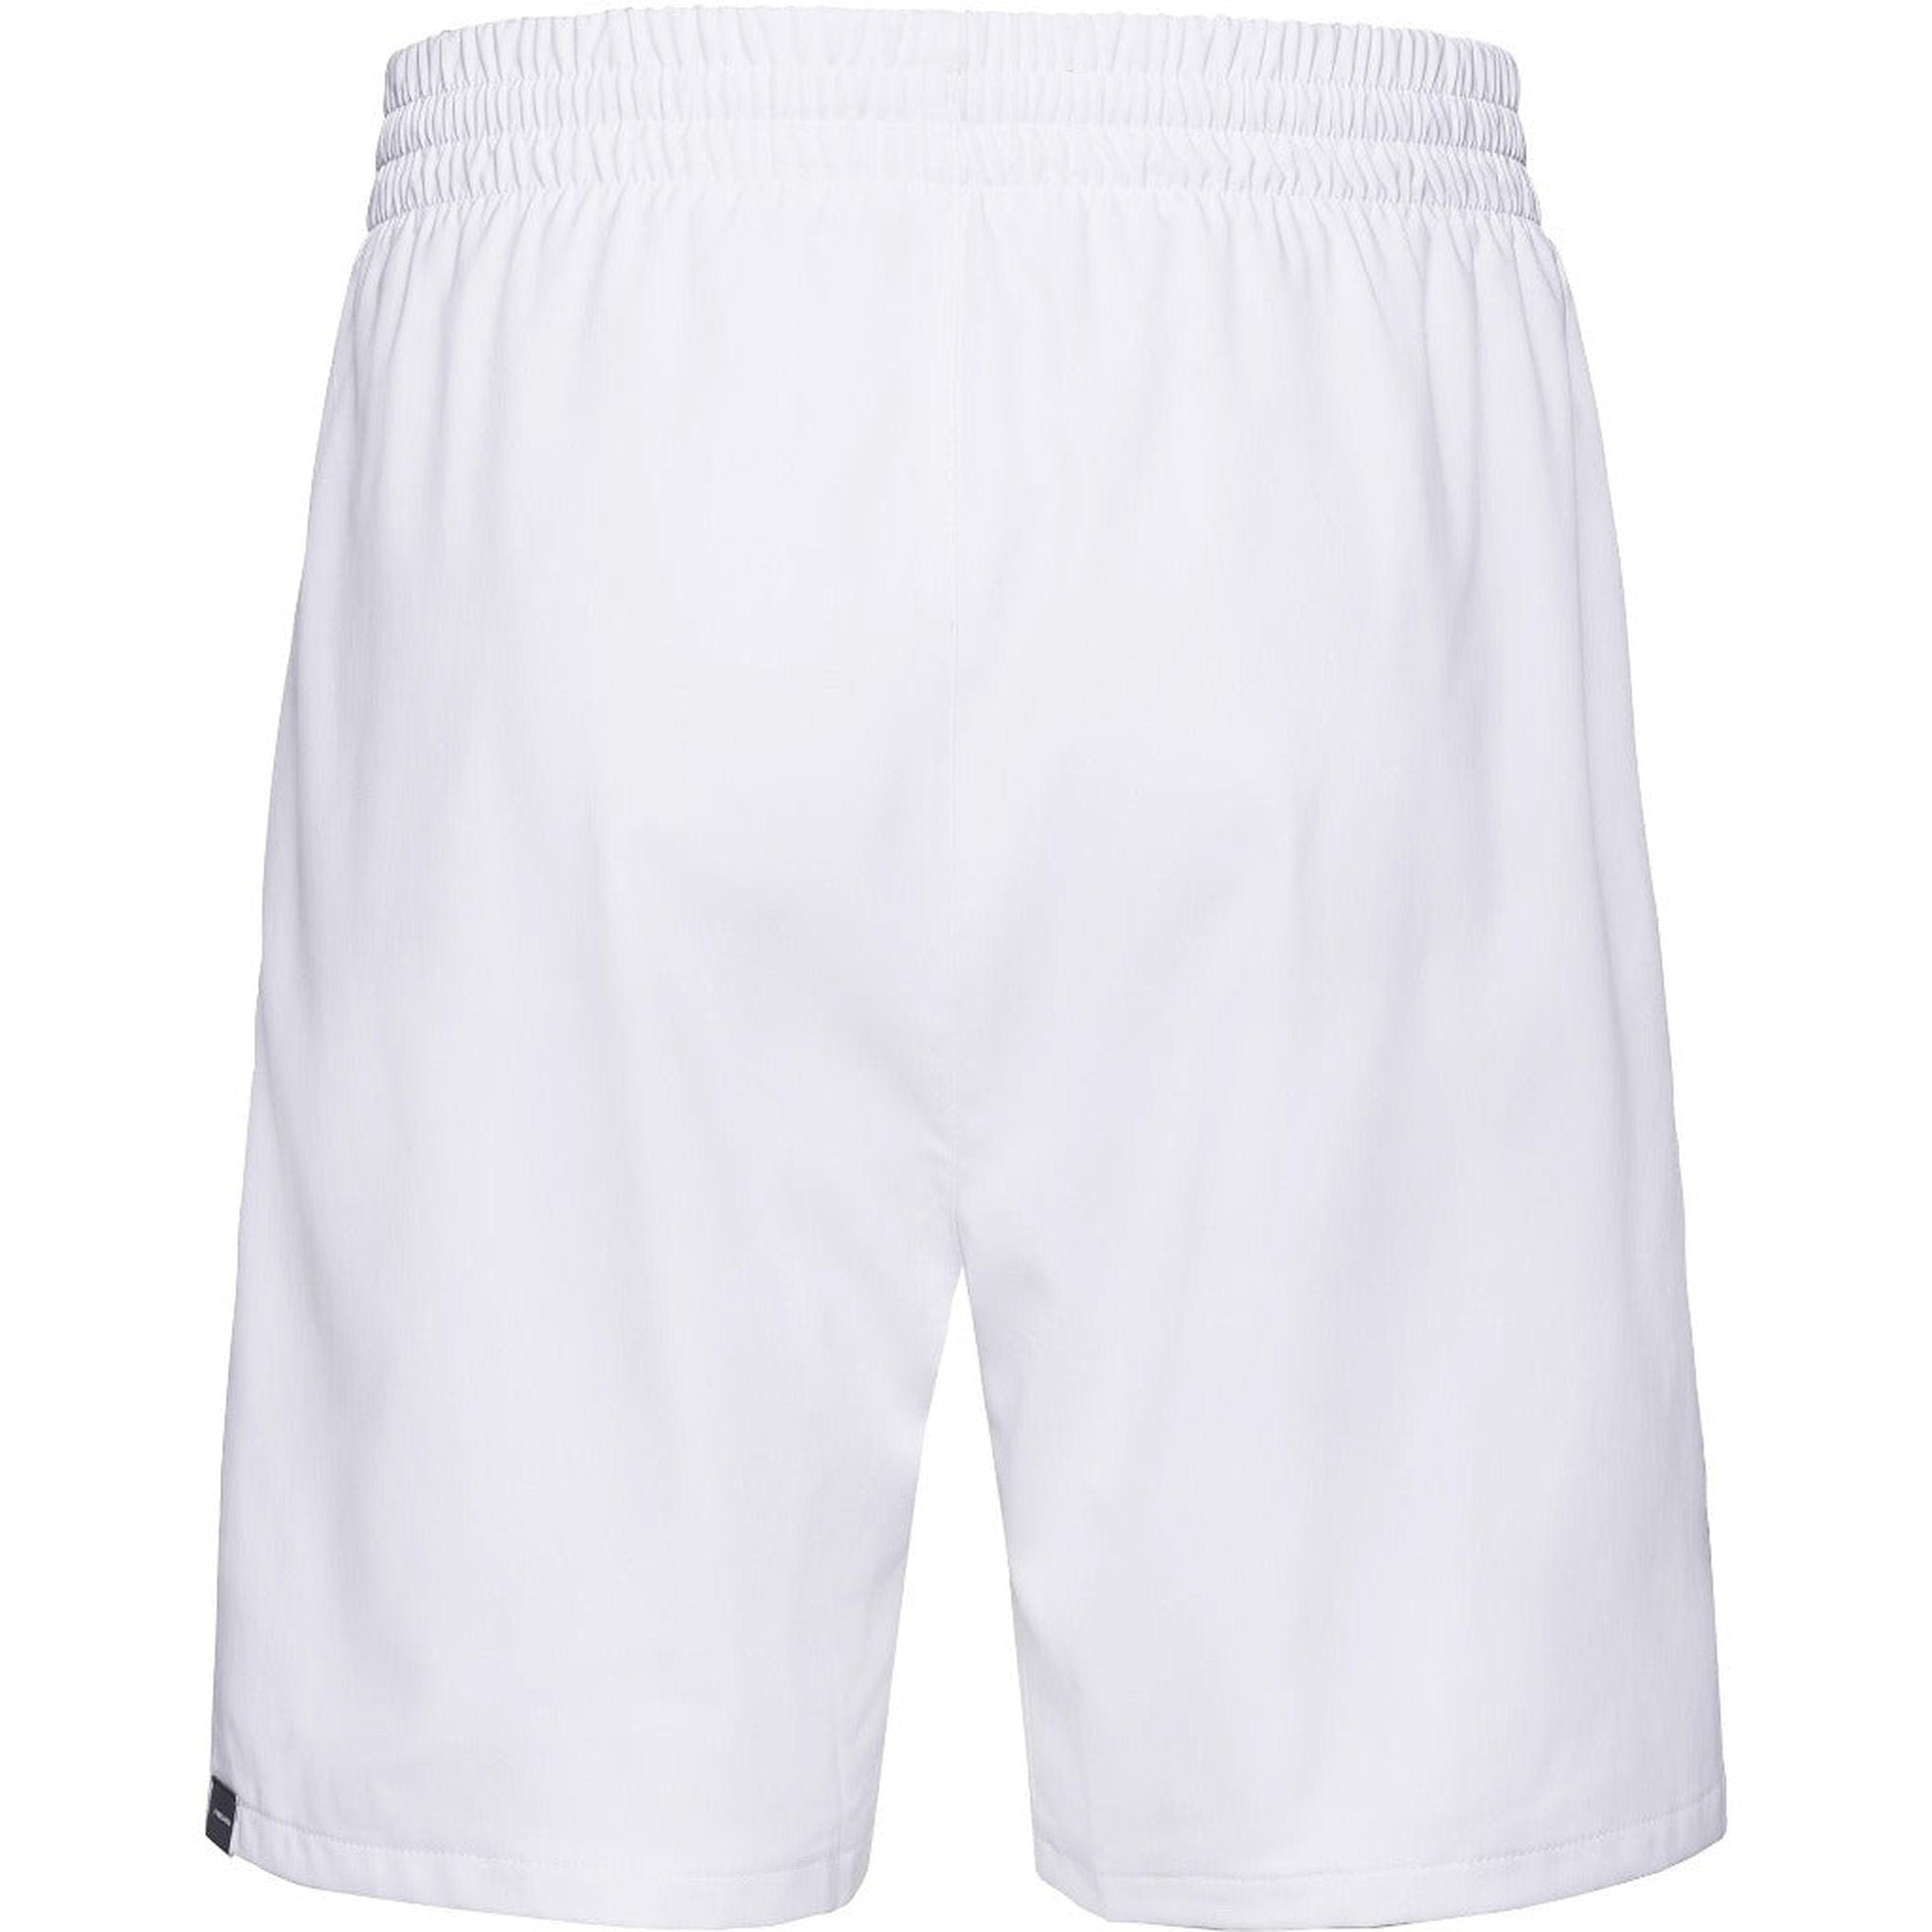 Head Mens Club Shorts - White